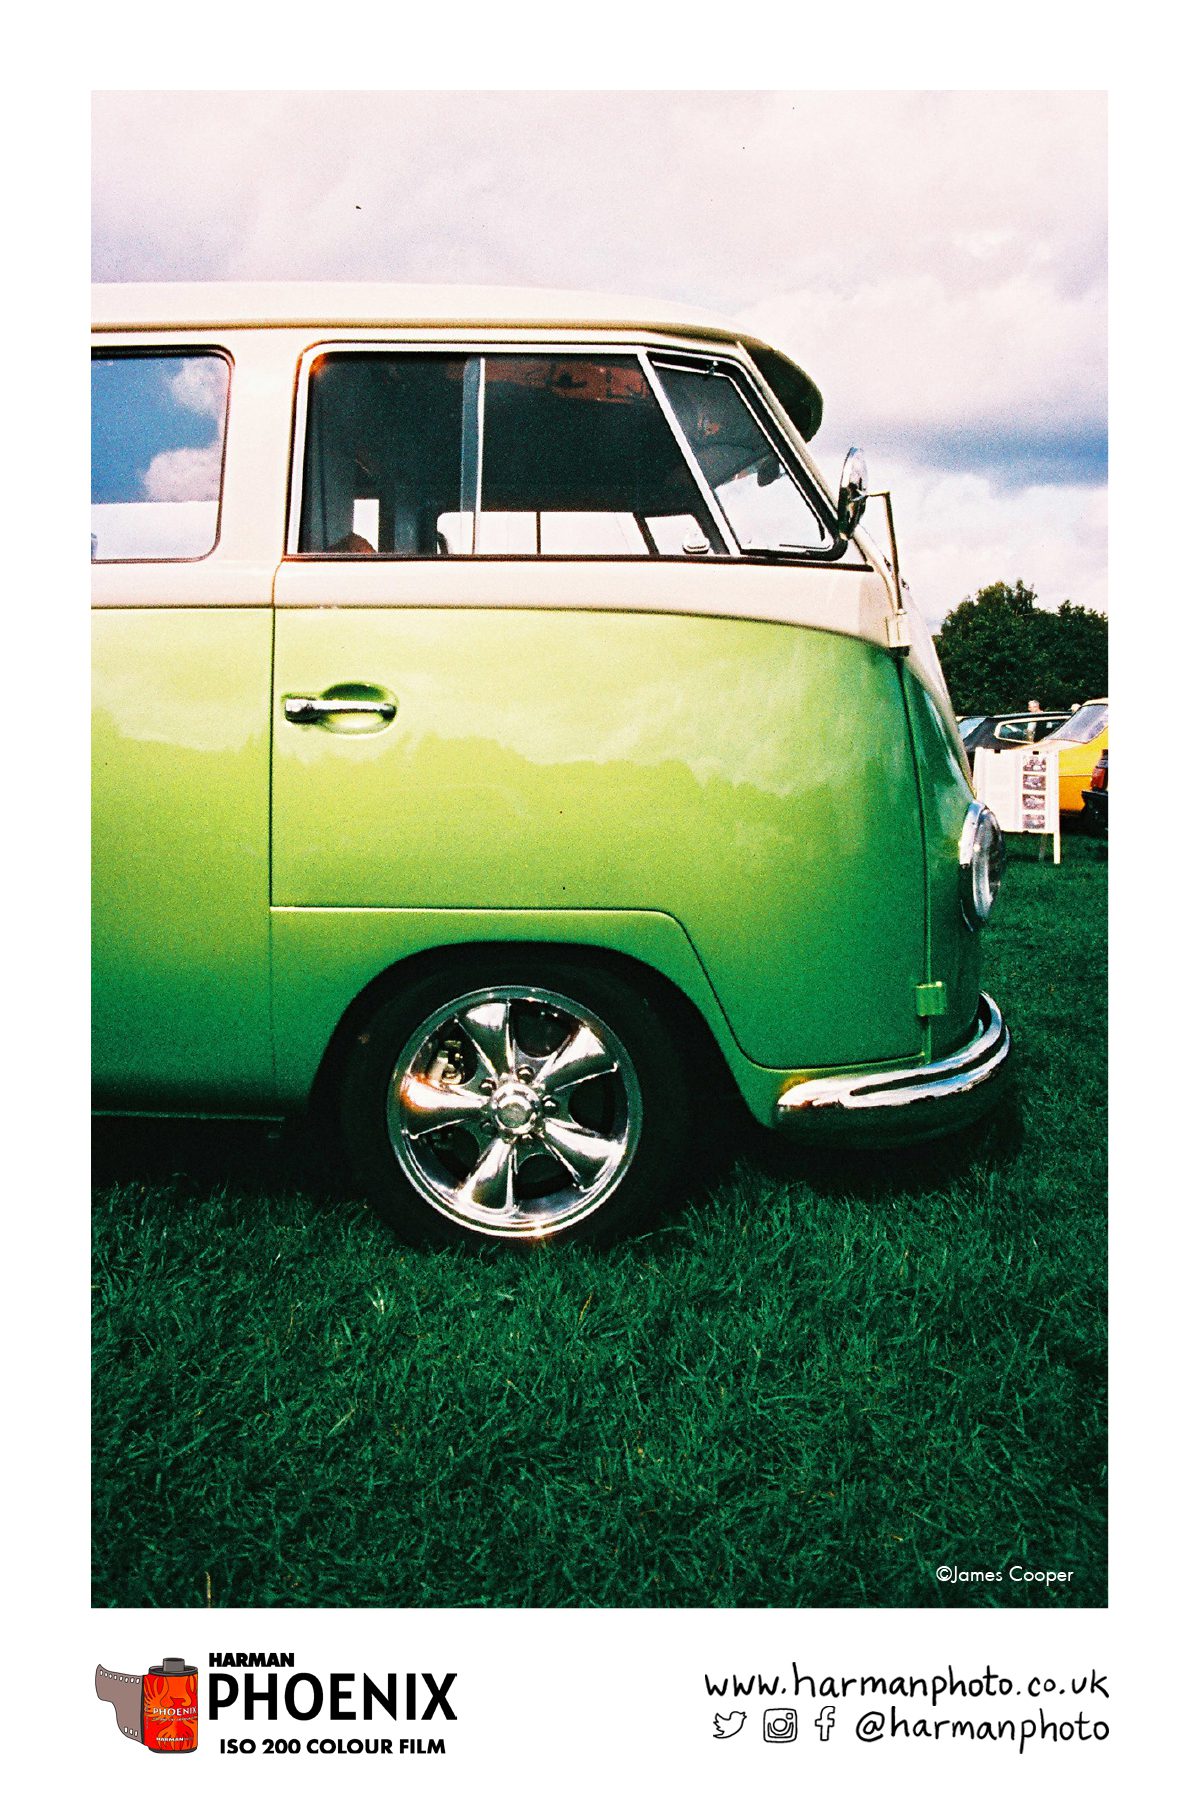 Green and White VW camper van shot on HARMAN Phoenix colour film